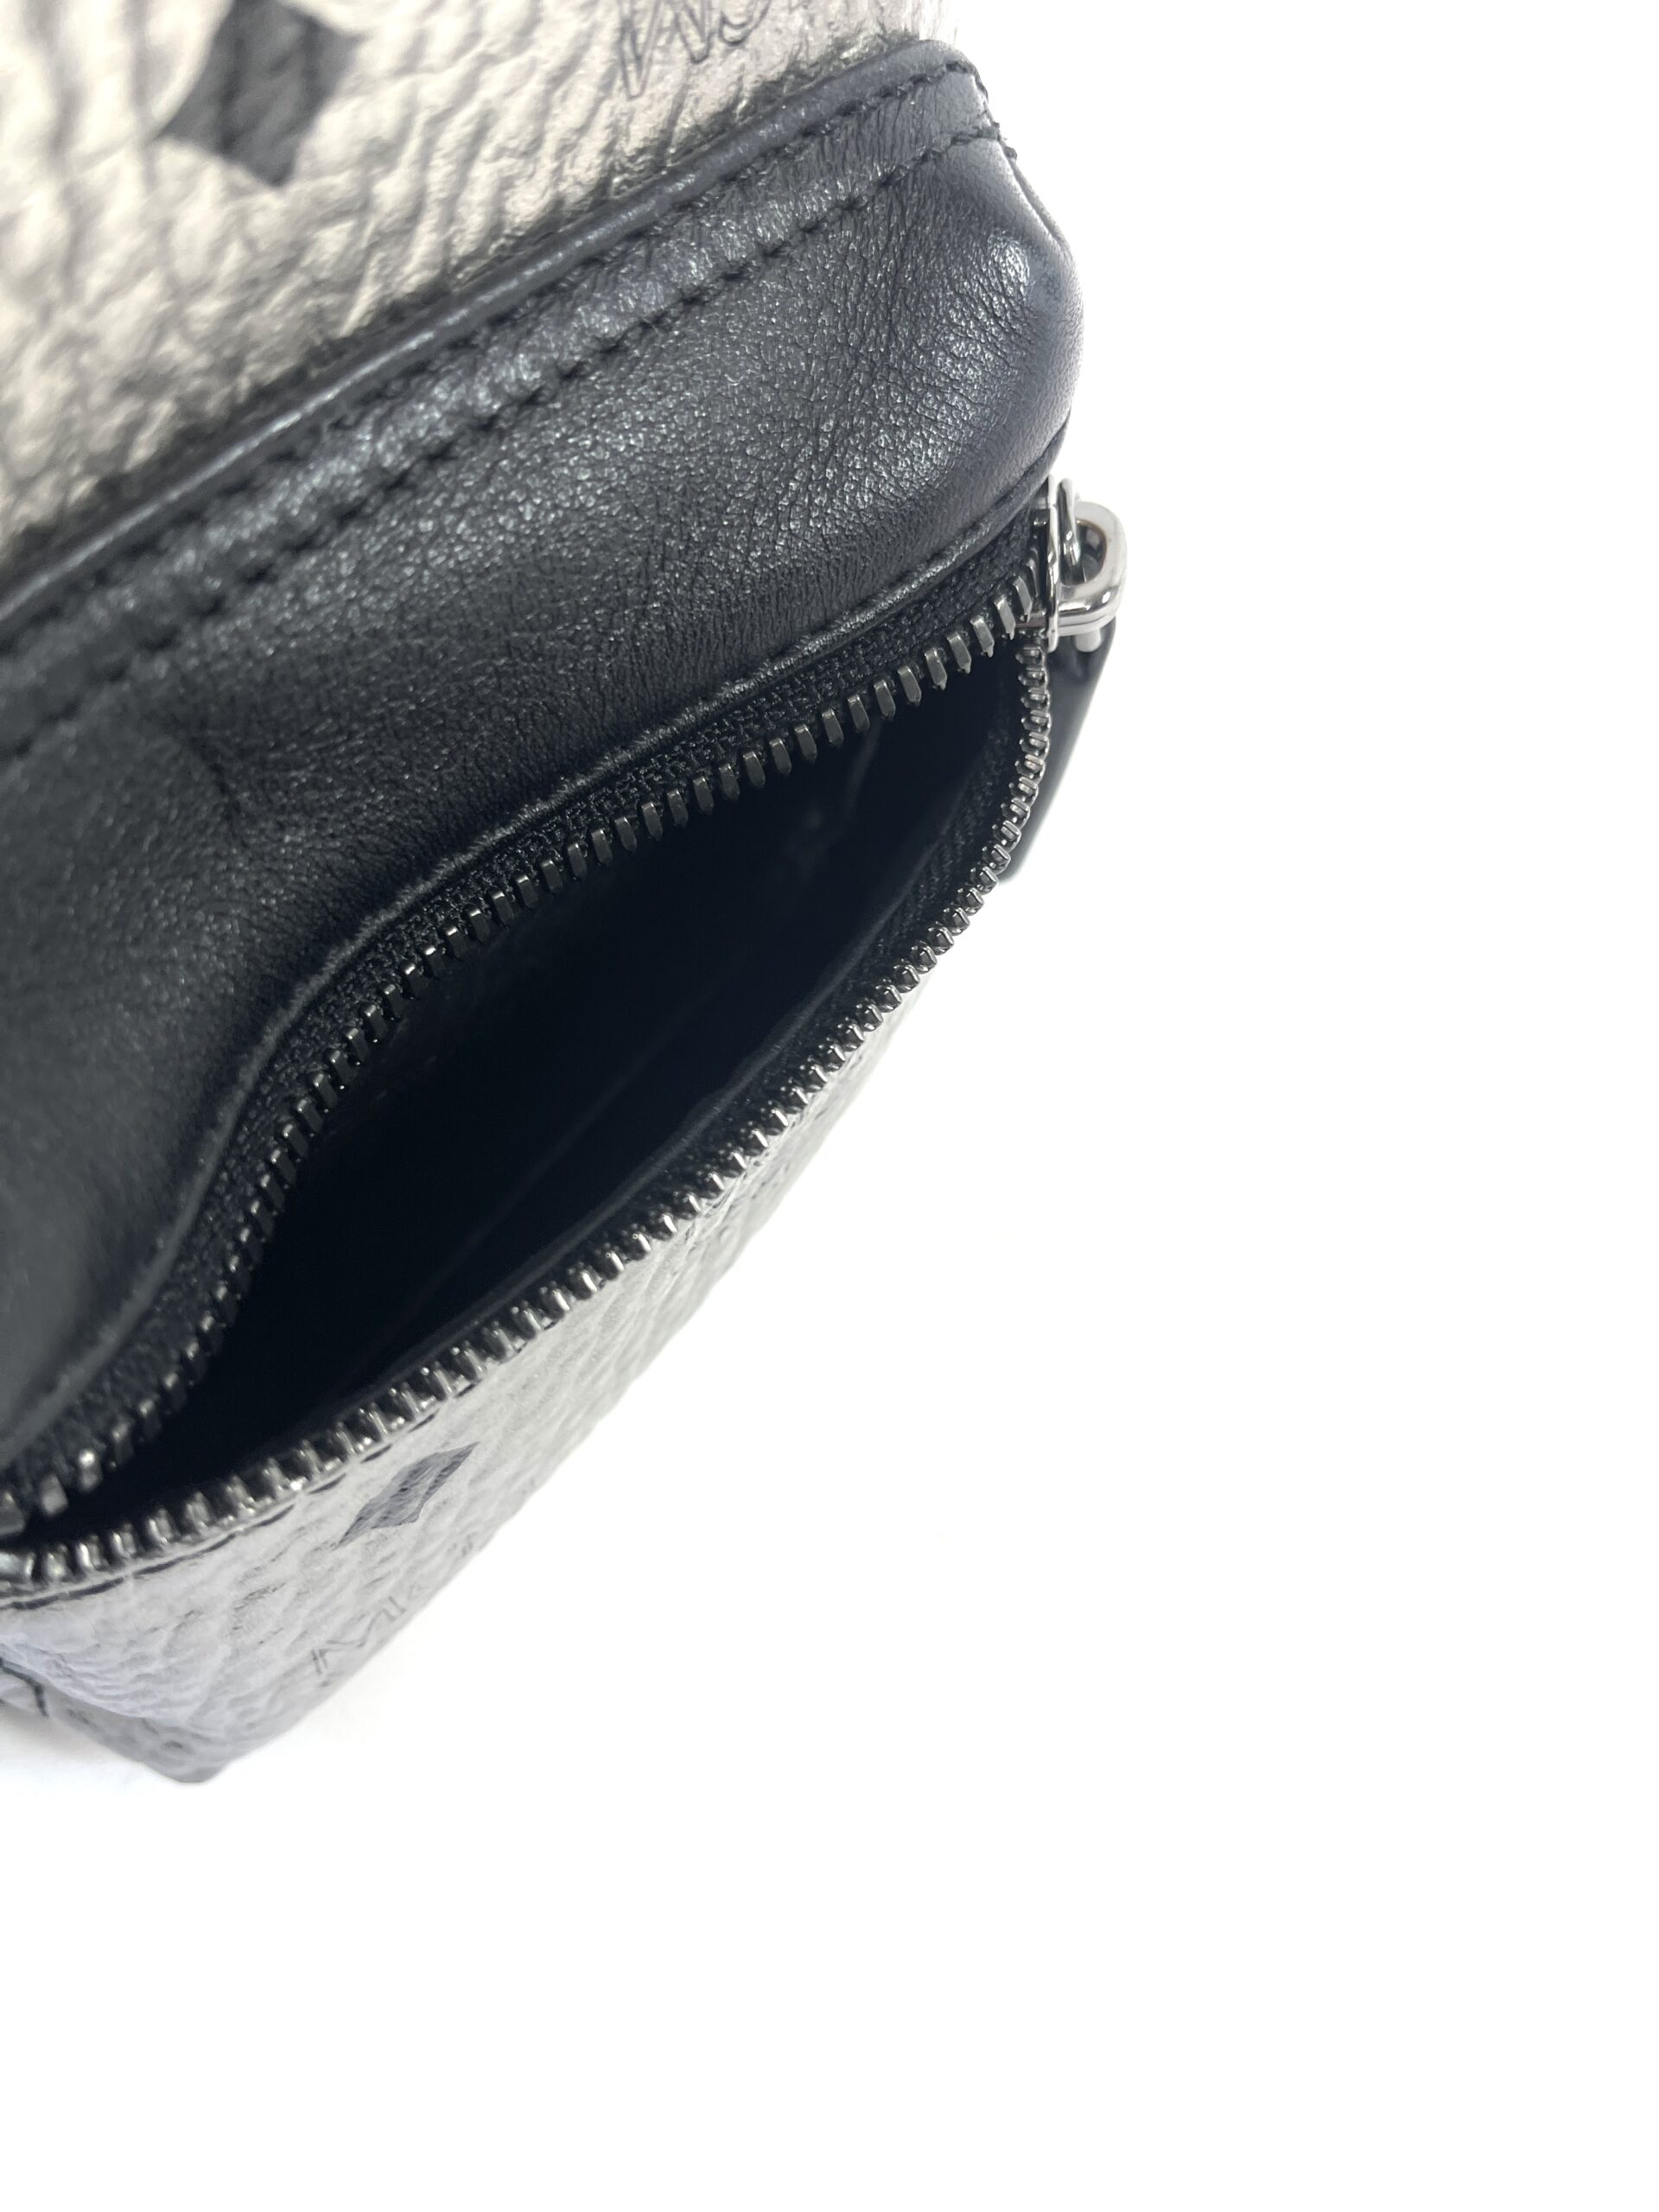 MCM, Bags, Authentic Mcm Black Pebbled Leather Crossbody Shoulder Bag